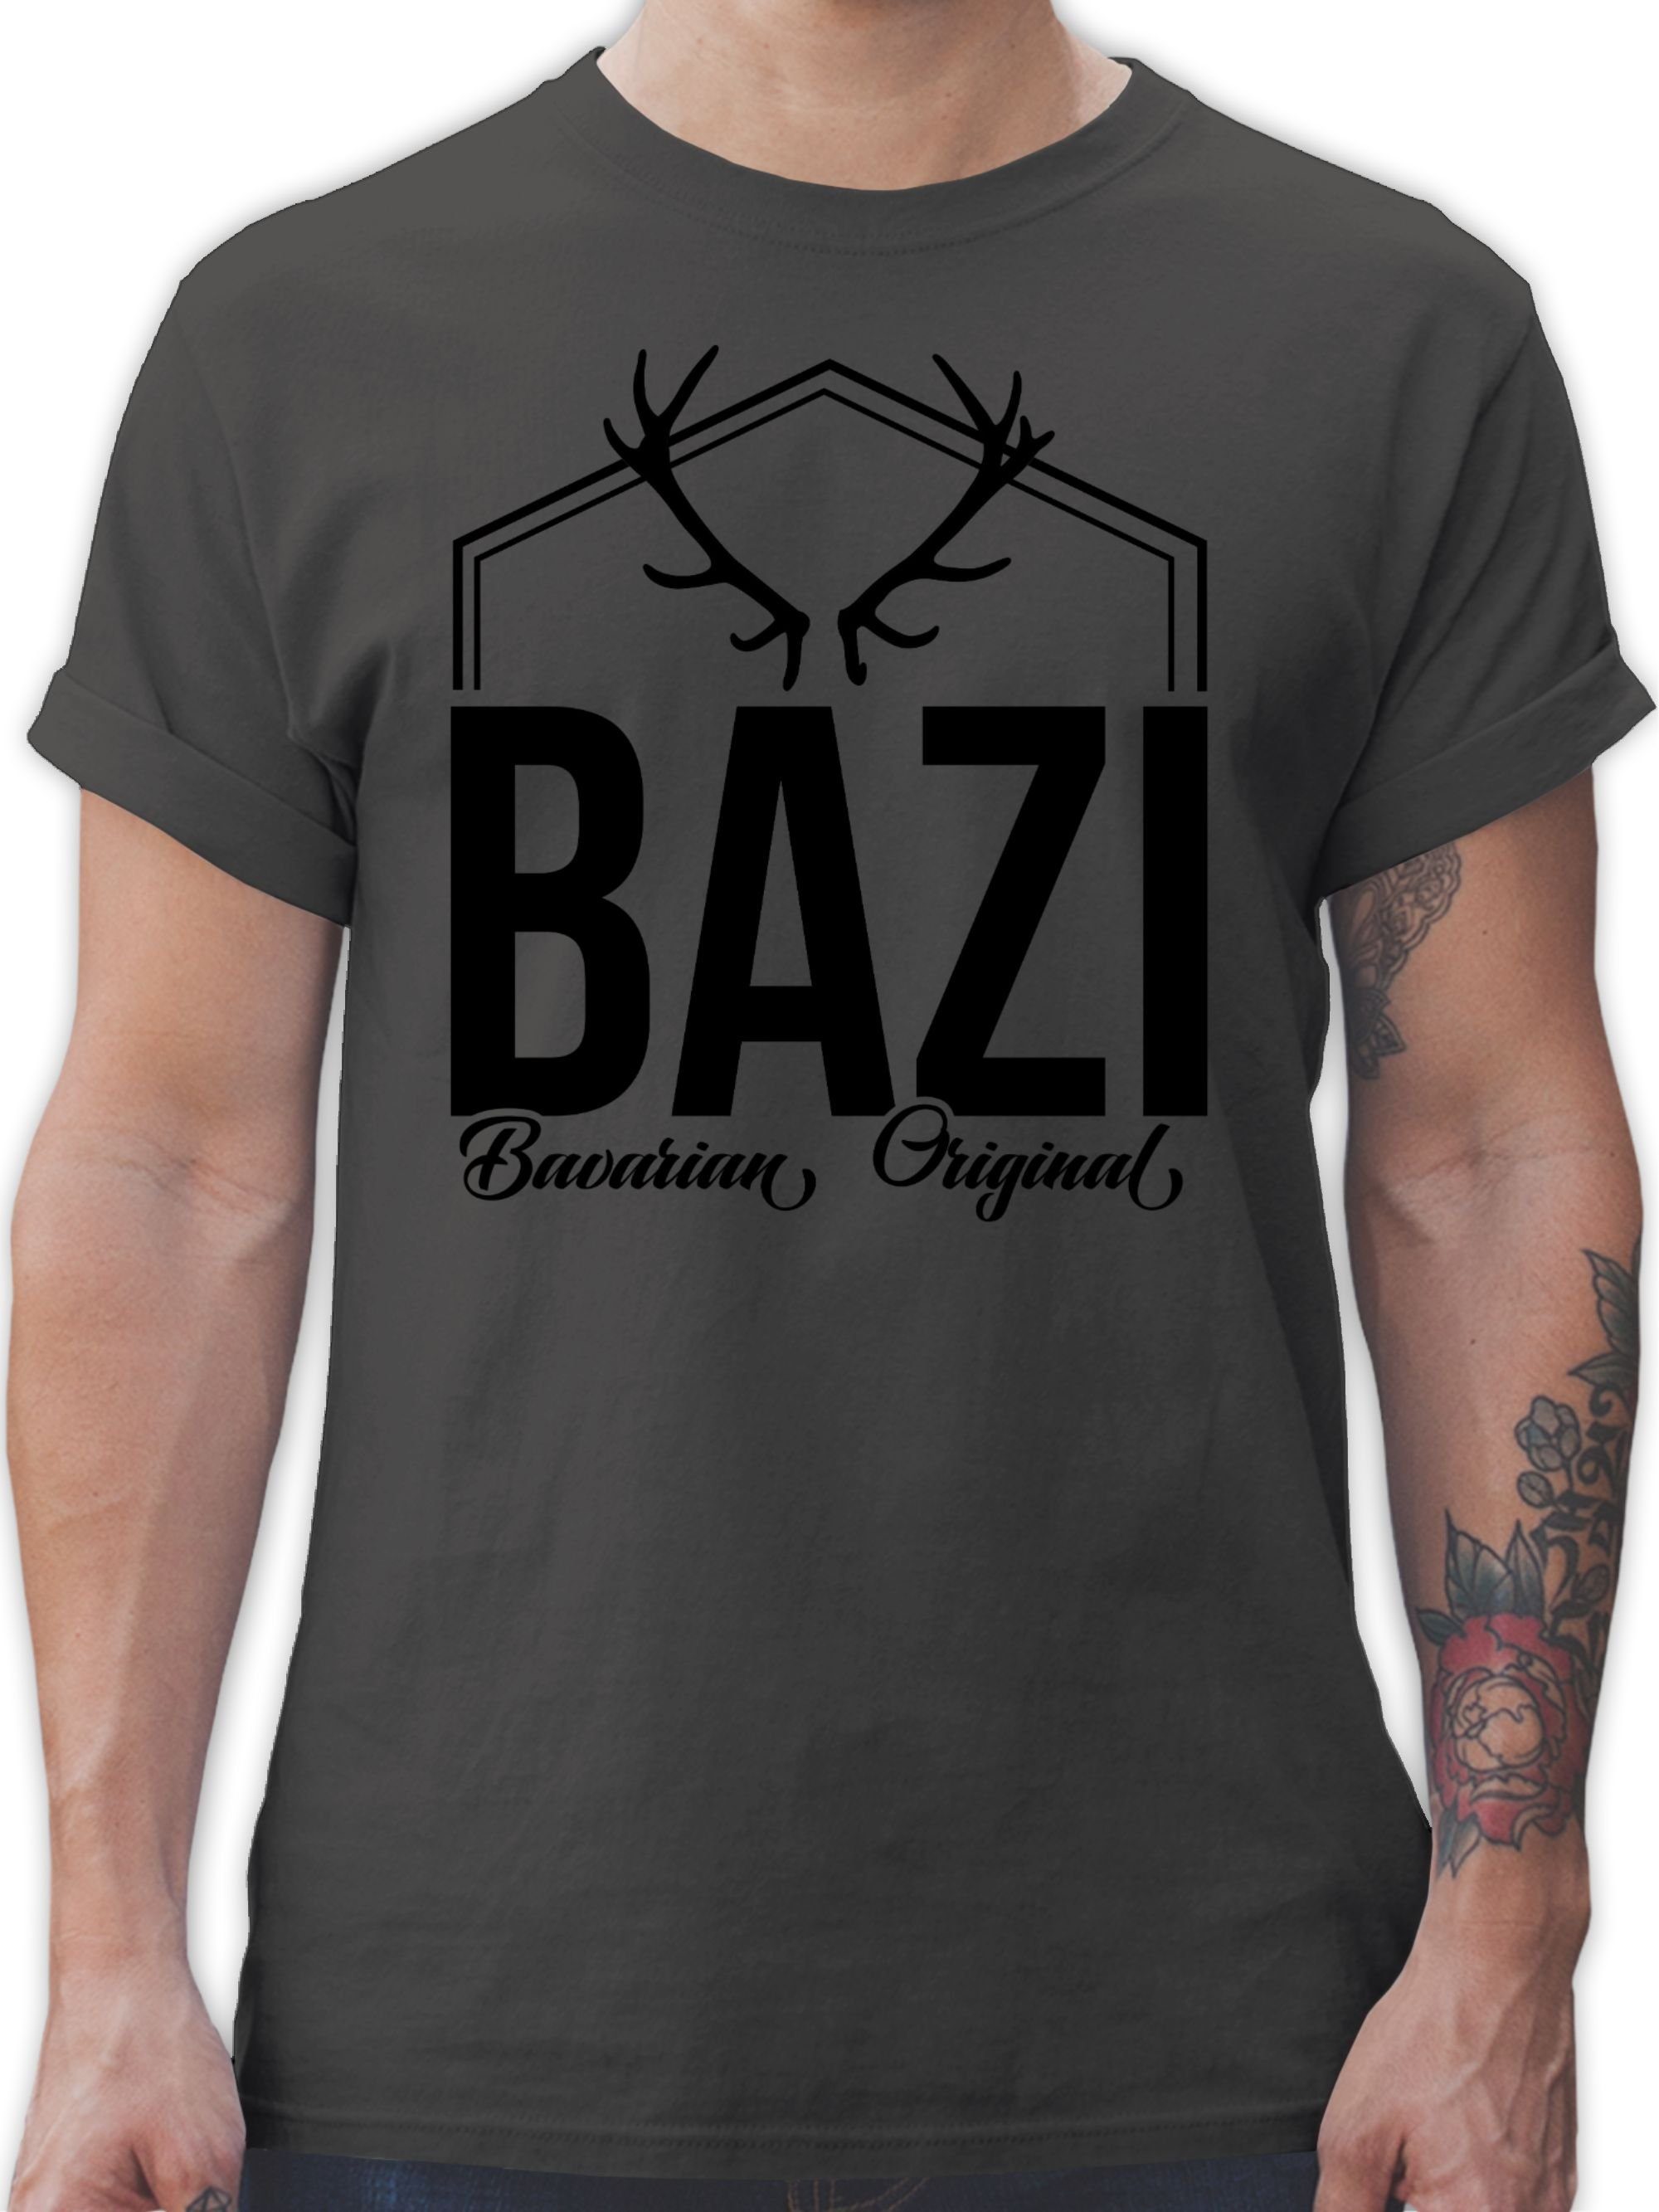 Shirtracer T-Shirt Bazi - Original Bavarian Bayern Männer 1 Dunkelgrau